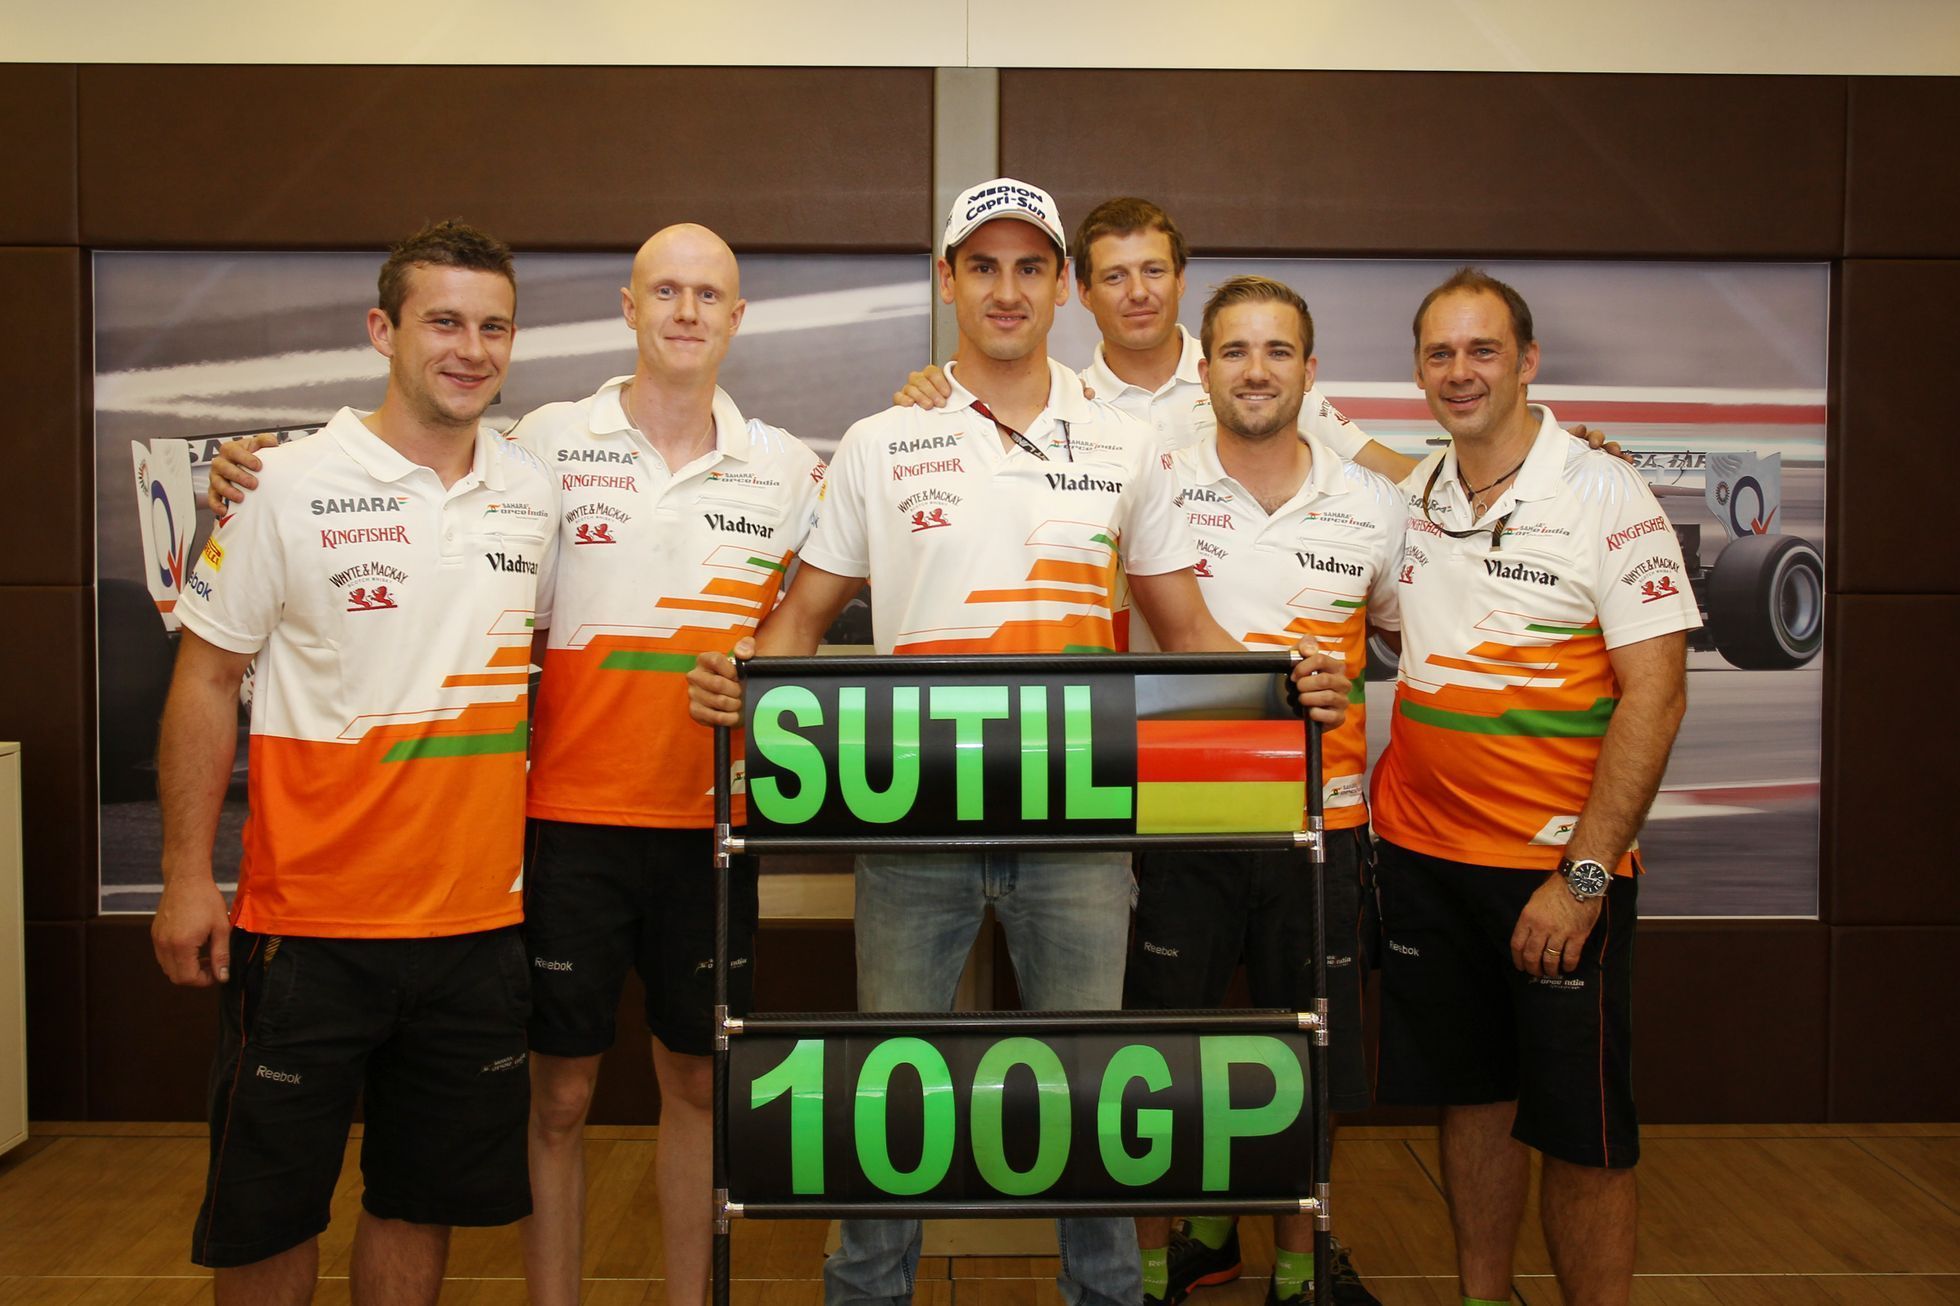 F1, VC Maďarska 2013: Adrian Sutil, Force India